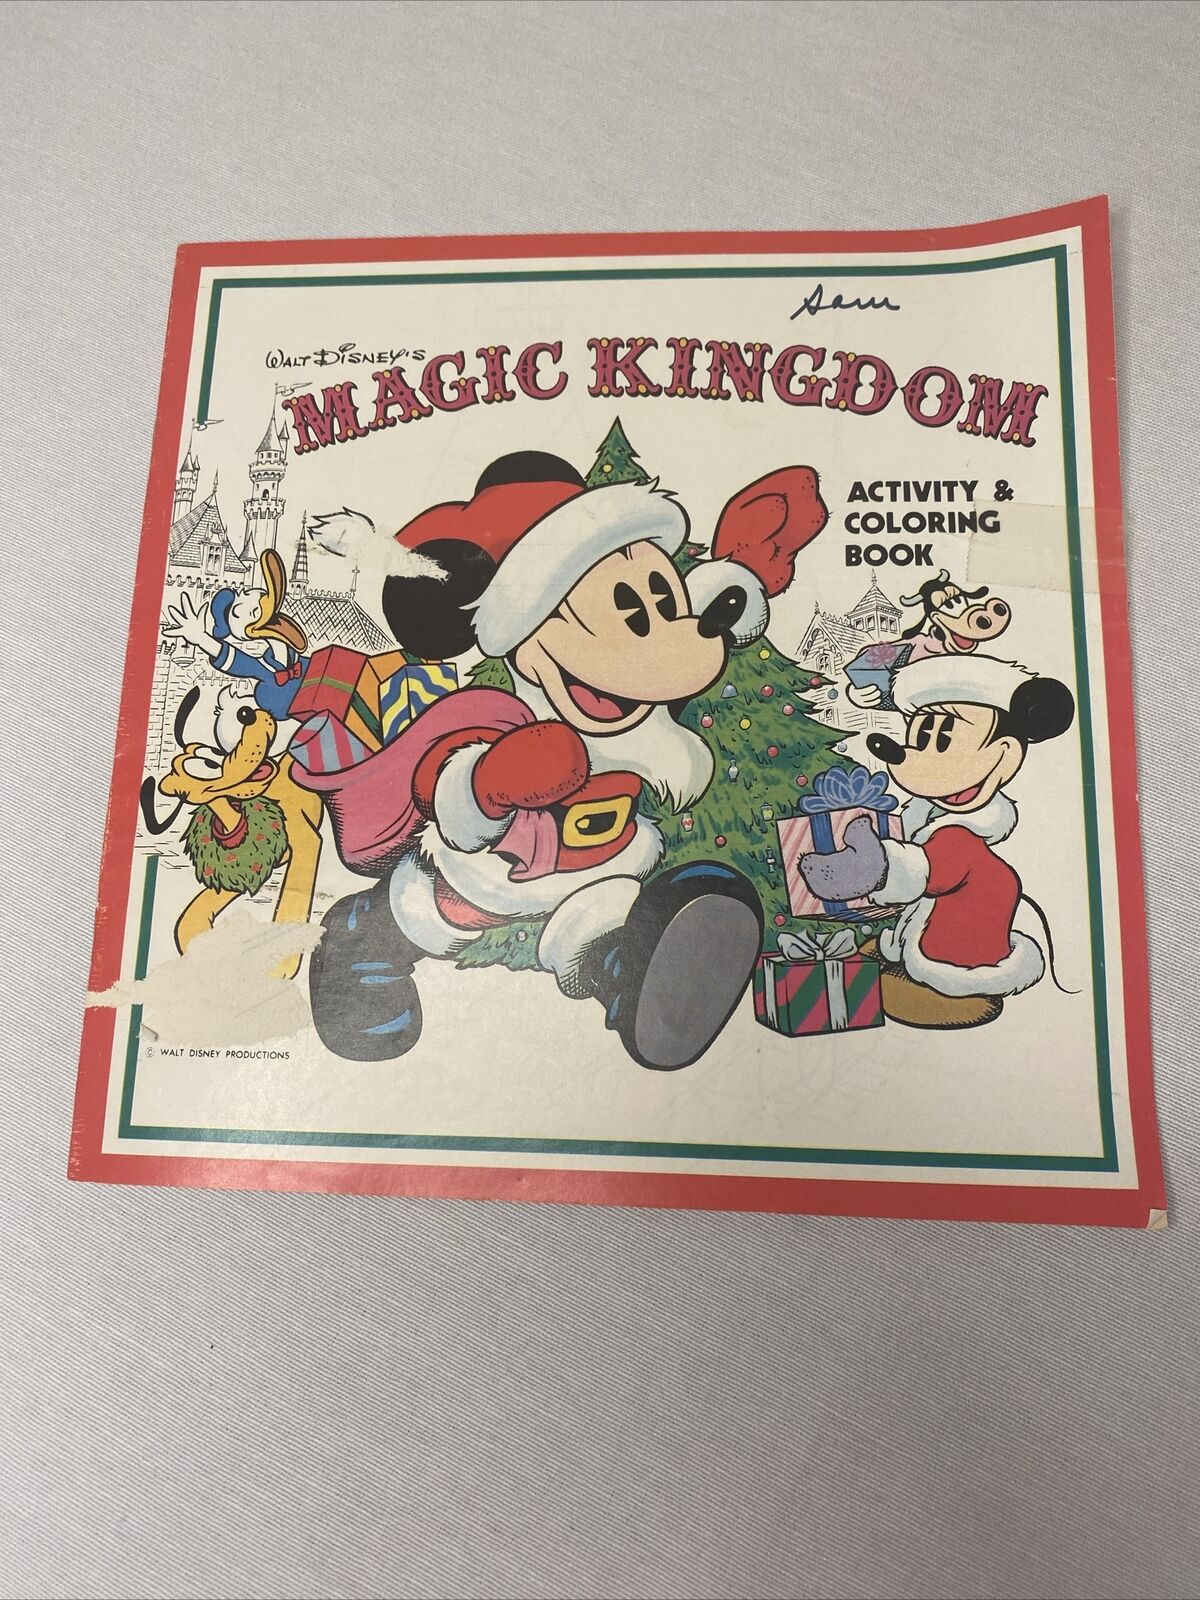 Vintage Walt Disney MAGIC KINGDOM ACTIVITY & COLORING BOOK from 1970's UNUSED